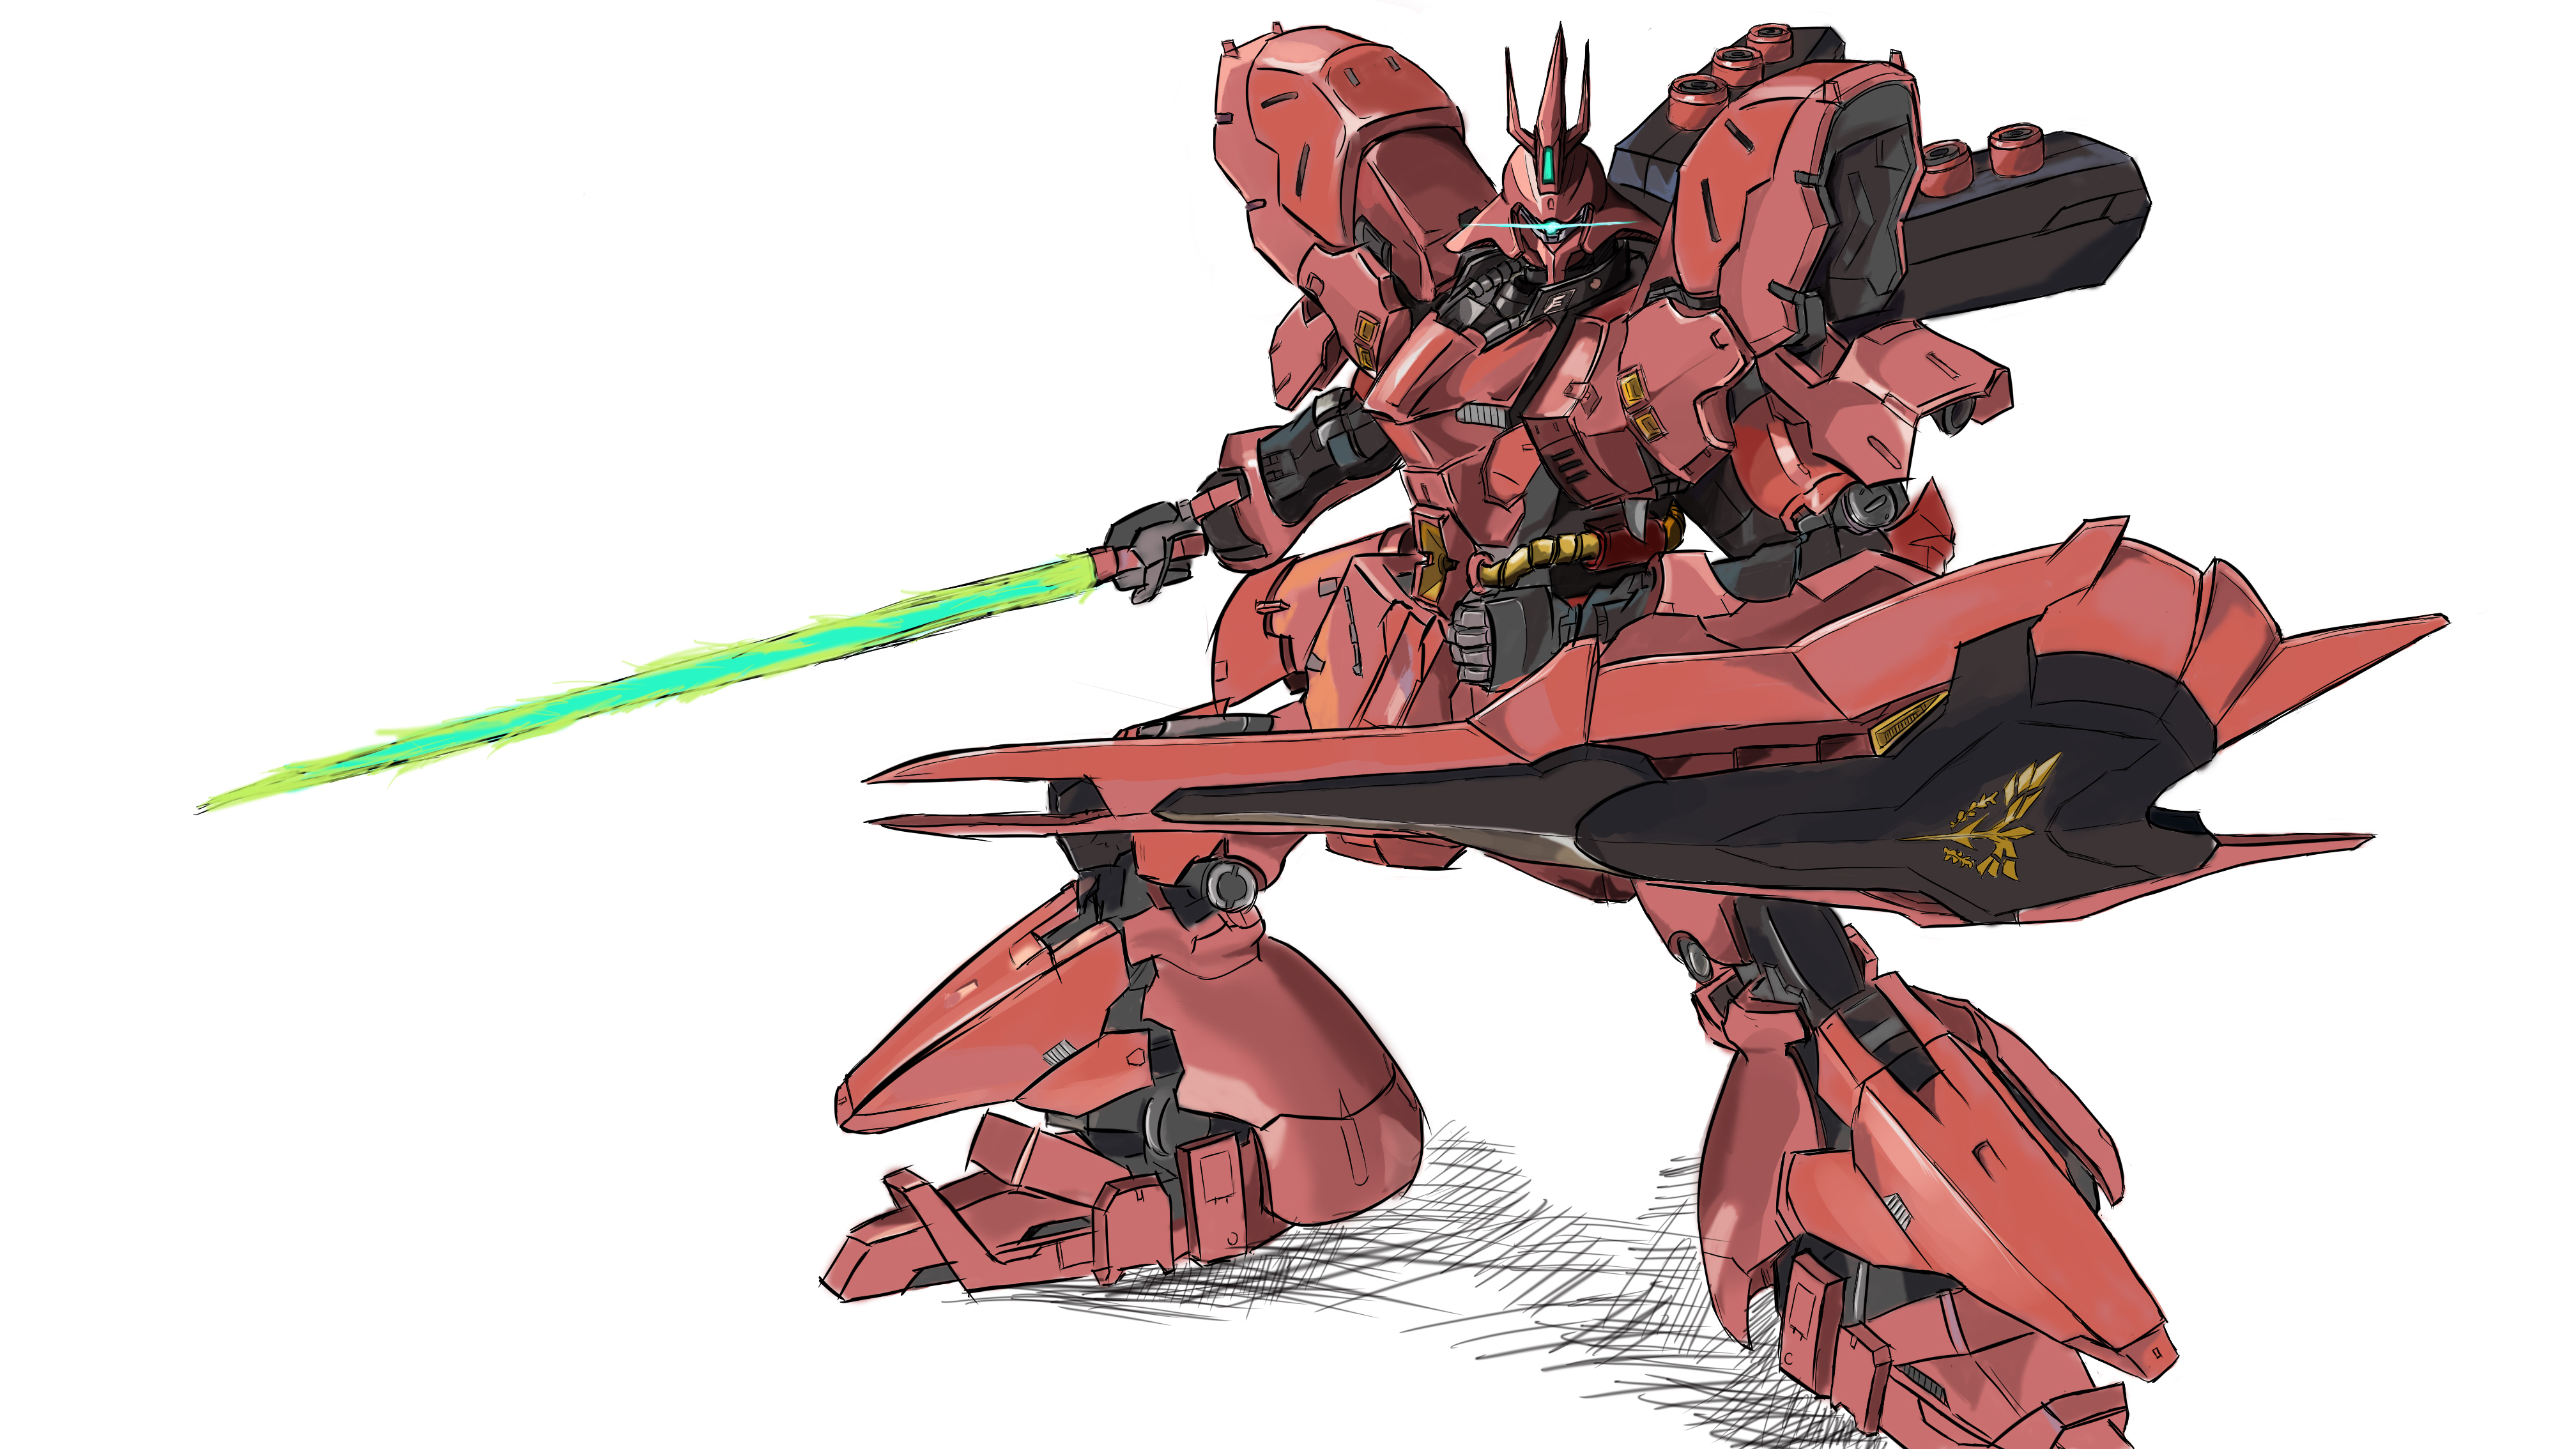 Anime 4032x2268 anime mechs Mobile Suit Super Robot Taisen Mobile Suit Gundam Char&#039;s Counterattack Sazabi artwork digital art fan art